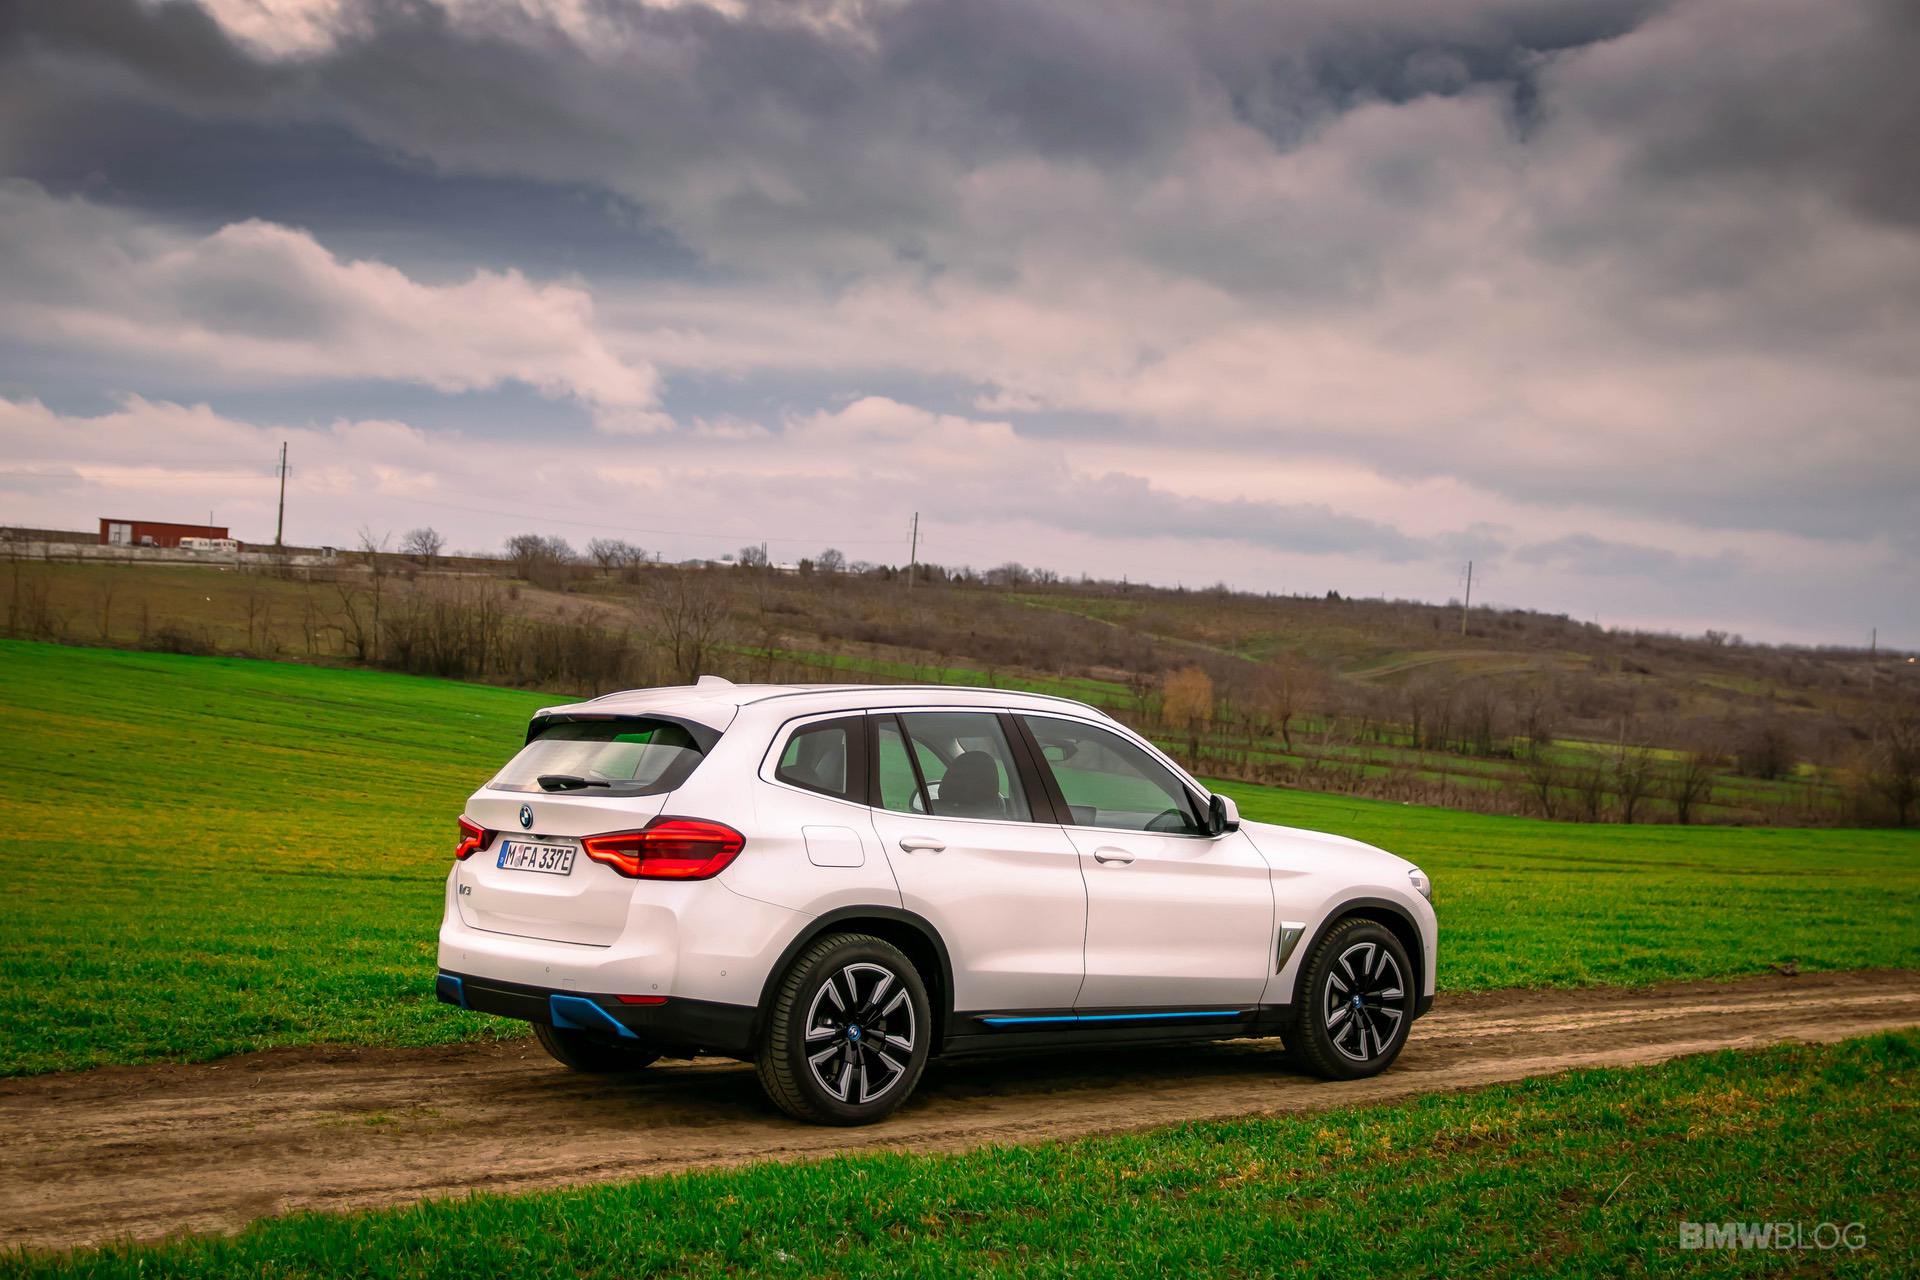 TEST DRIVE: 2021 BMW iX3 Electric SUV – Incremental Steps